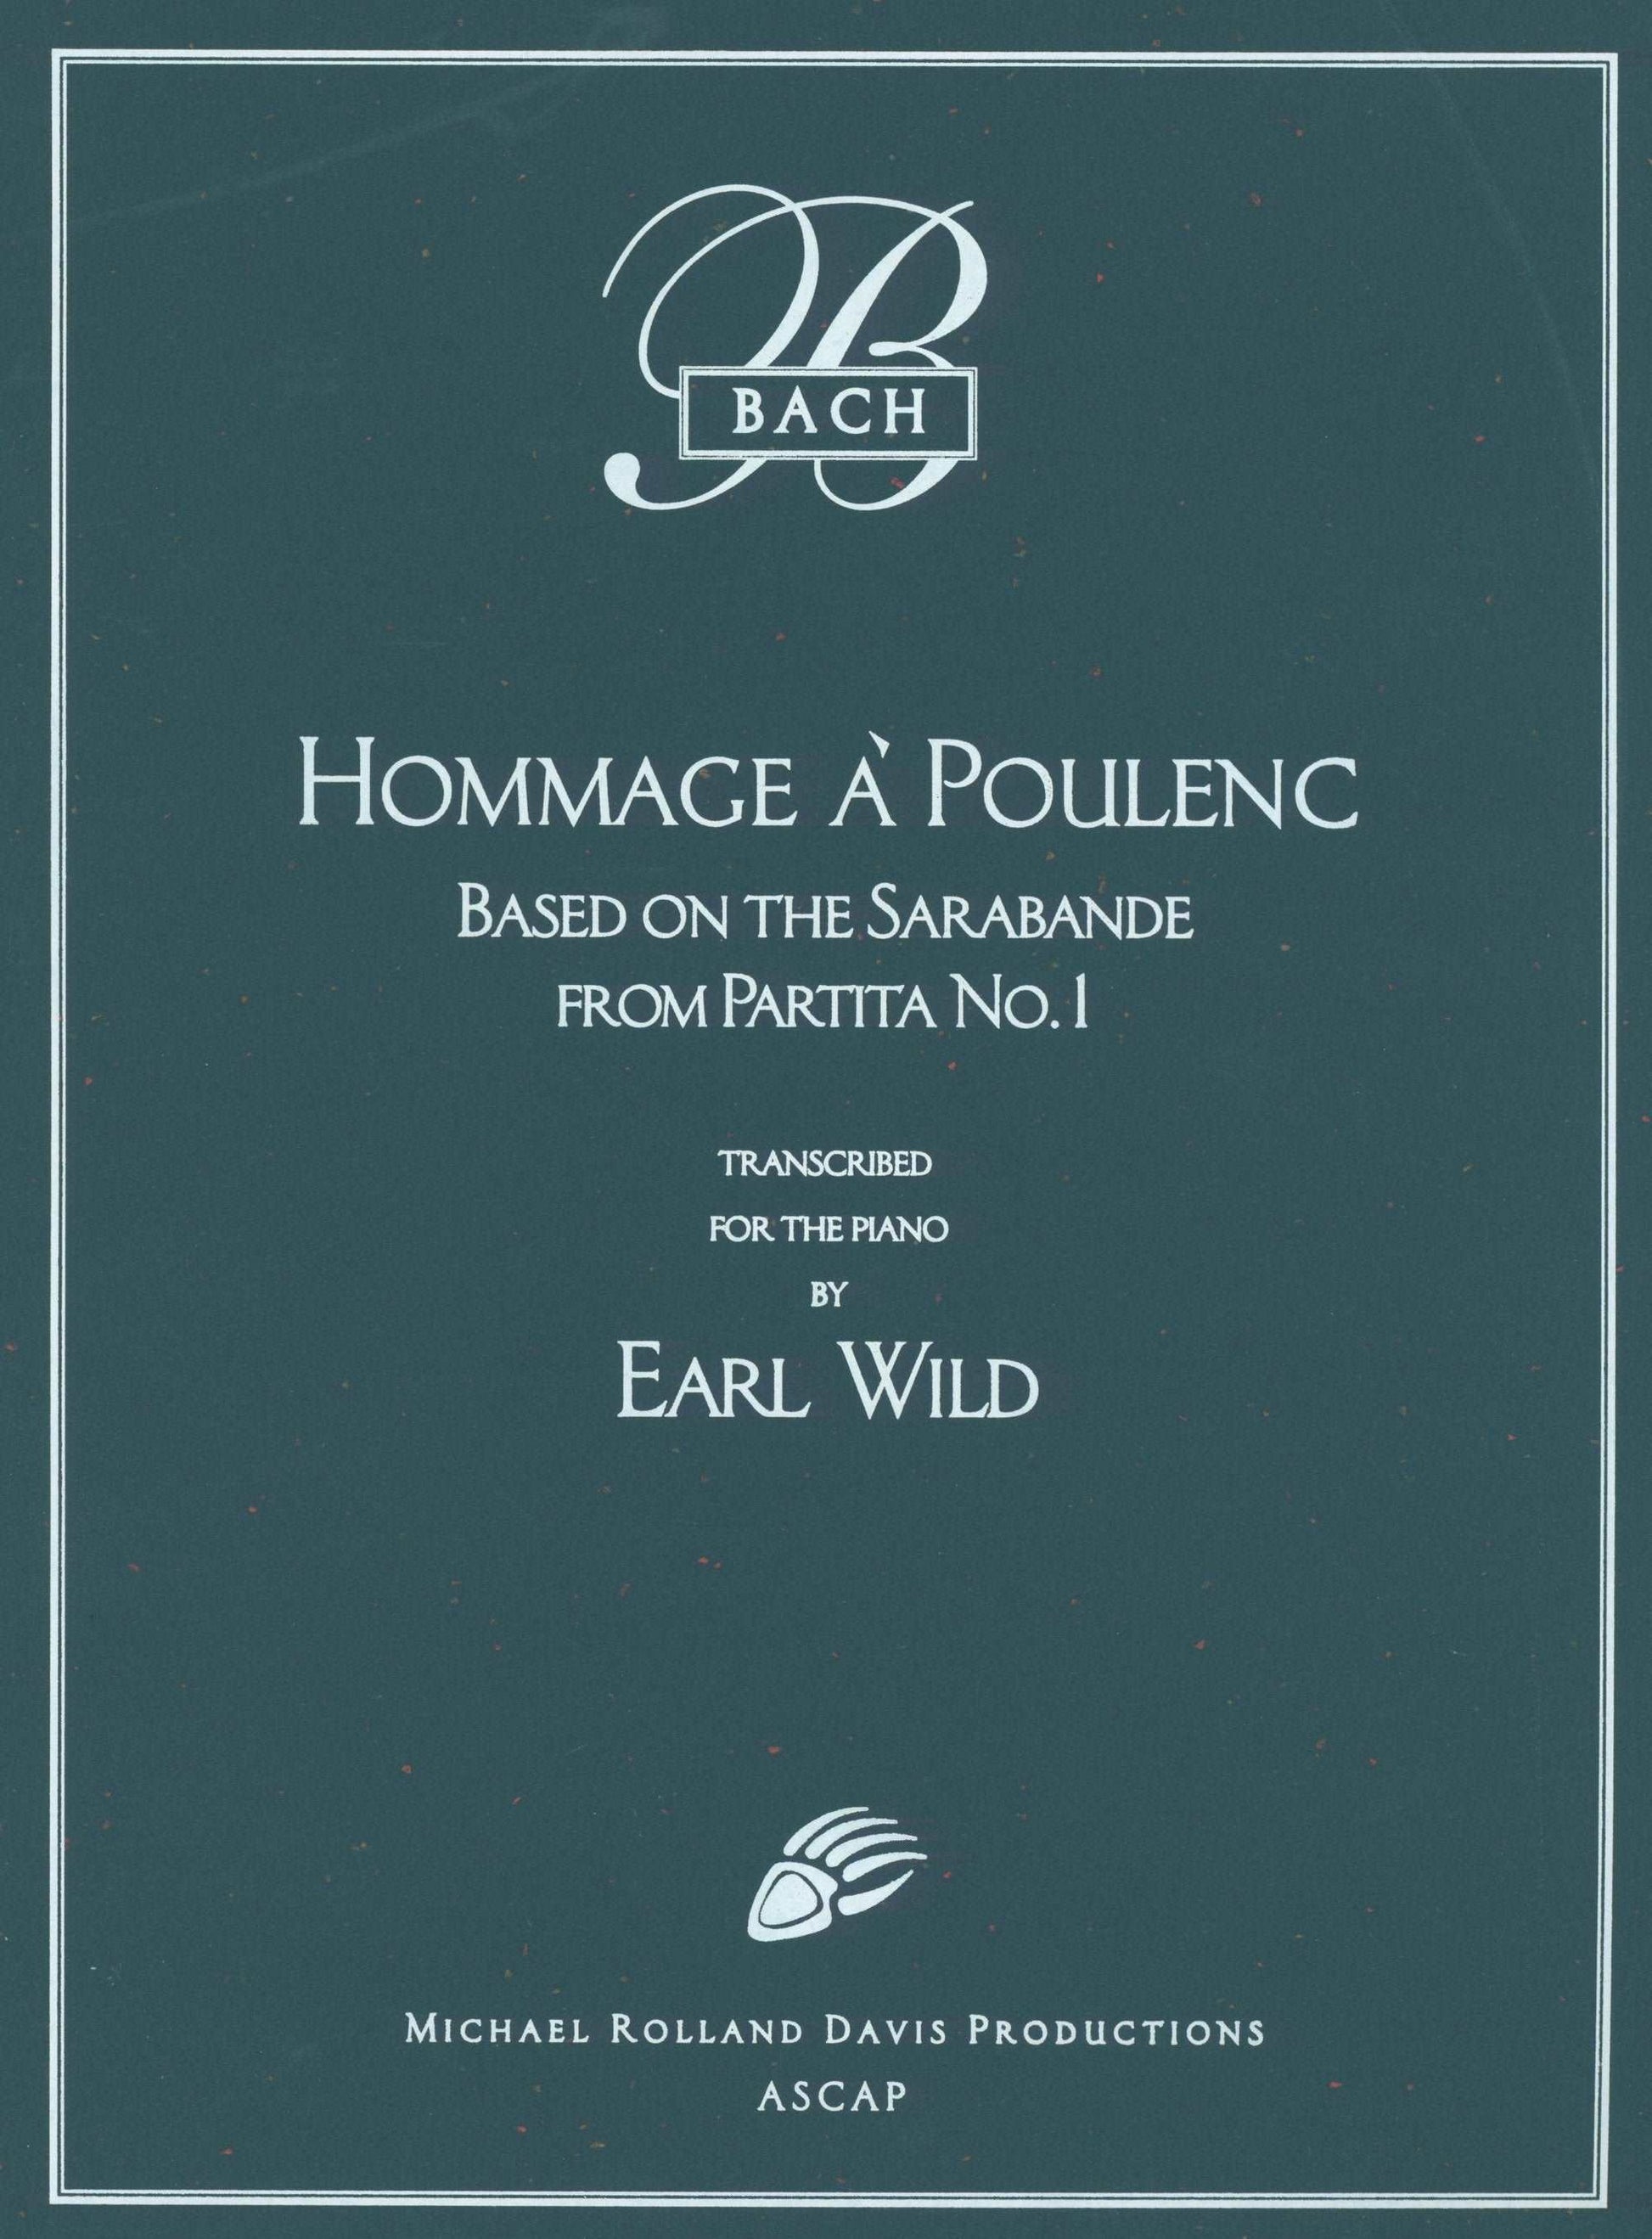 Earl Wild's Hommage à Poulenc: A Piano Transcription tribute to Bach and Poulenc